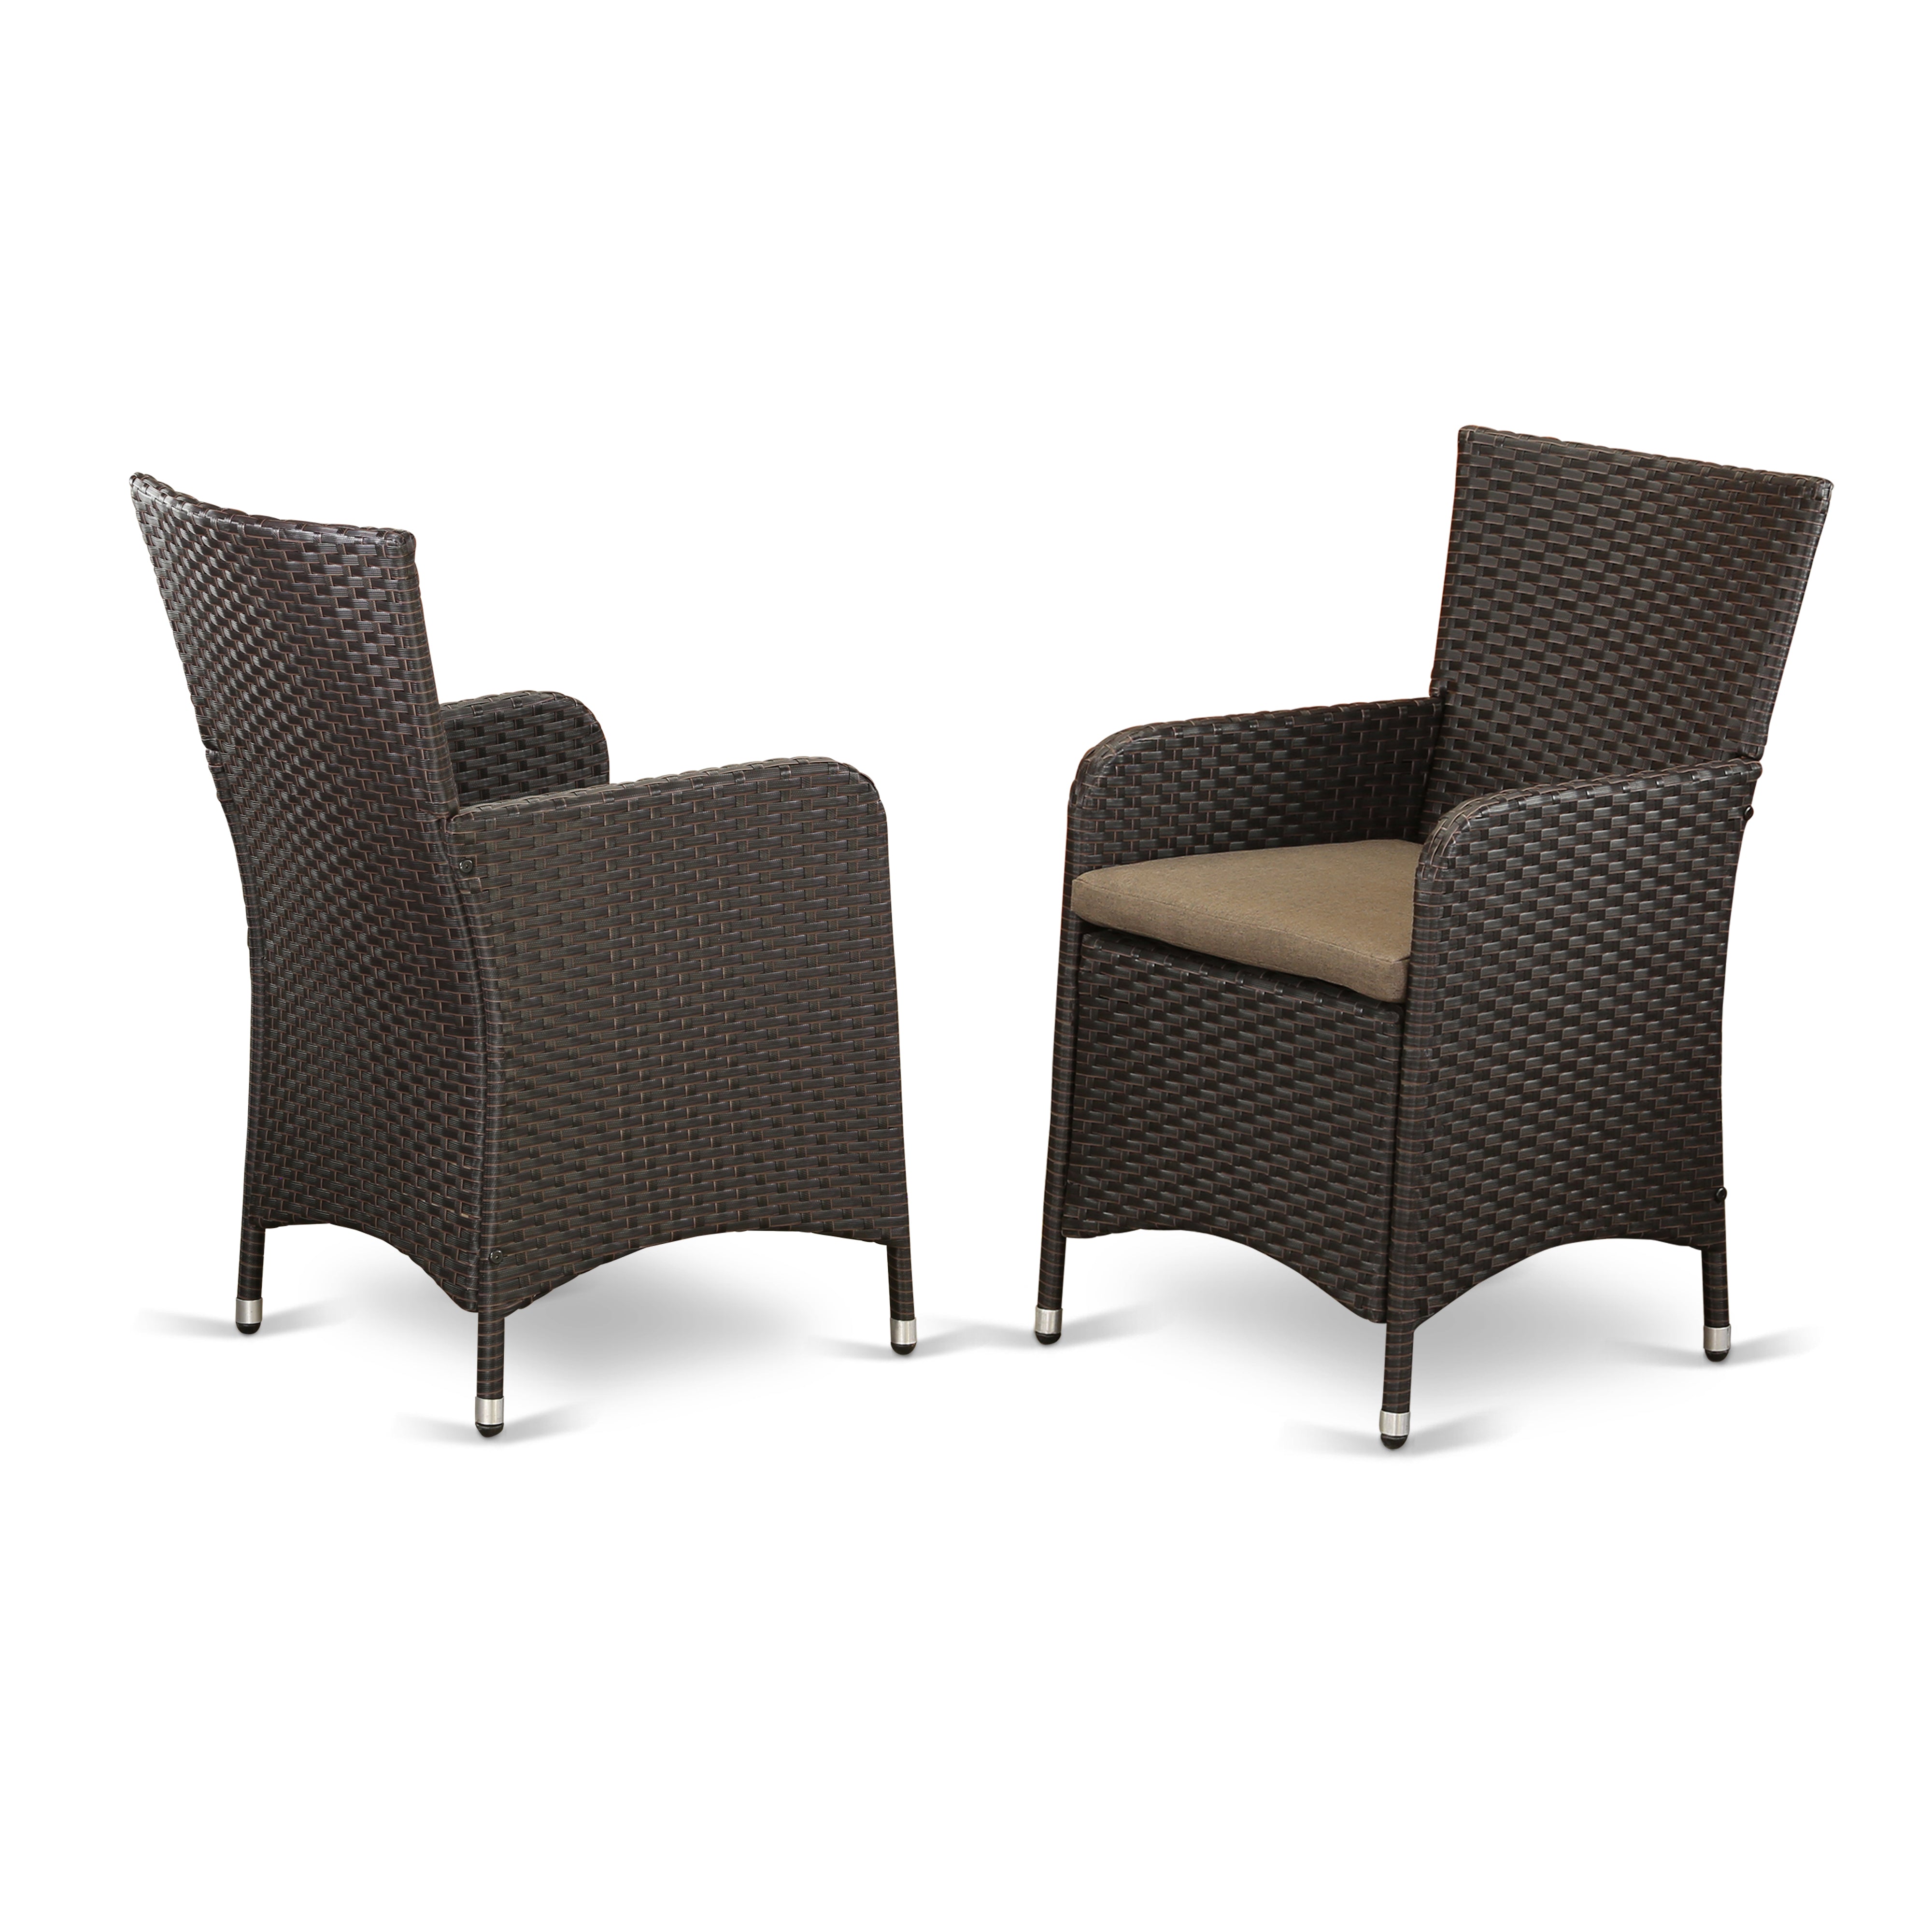 HLUC163S Outdoor-Furniture Wicker Patio Chair in Dark Brown Finish